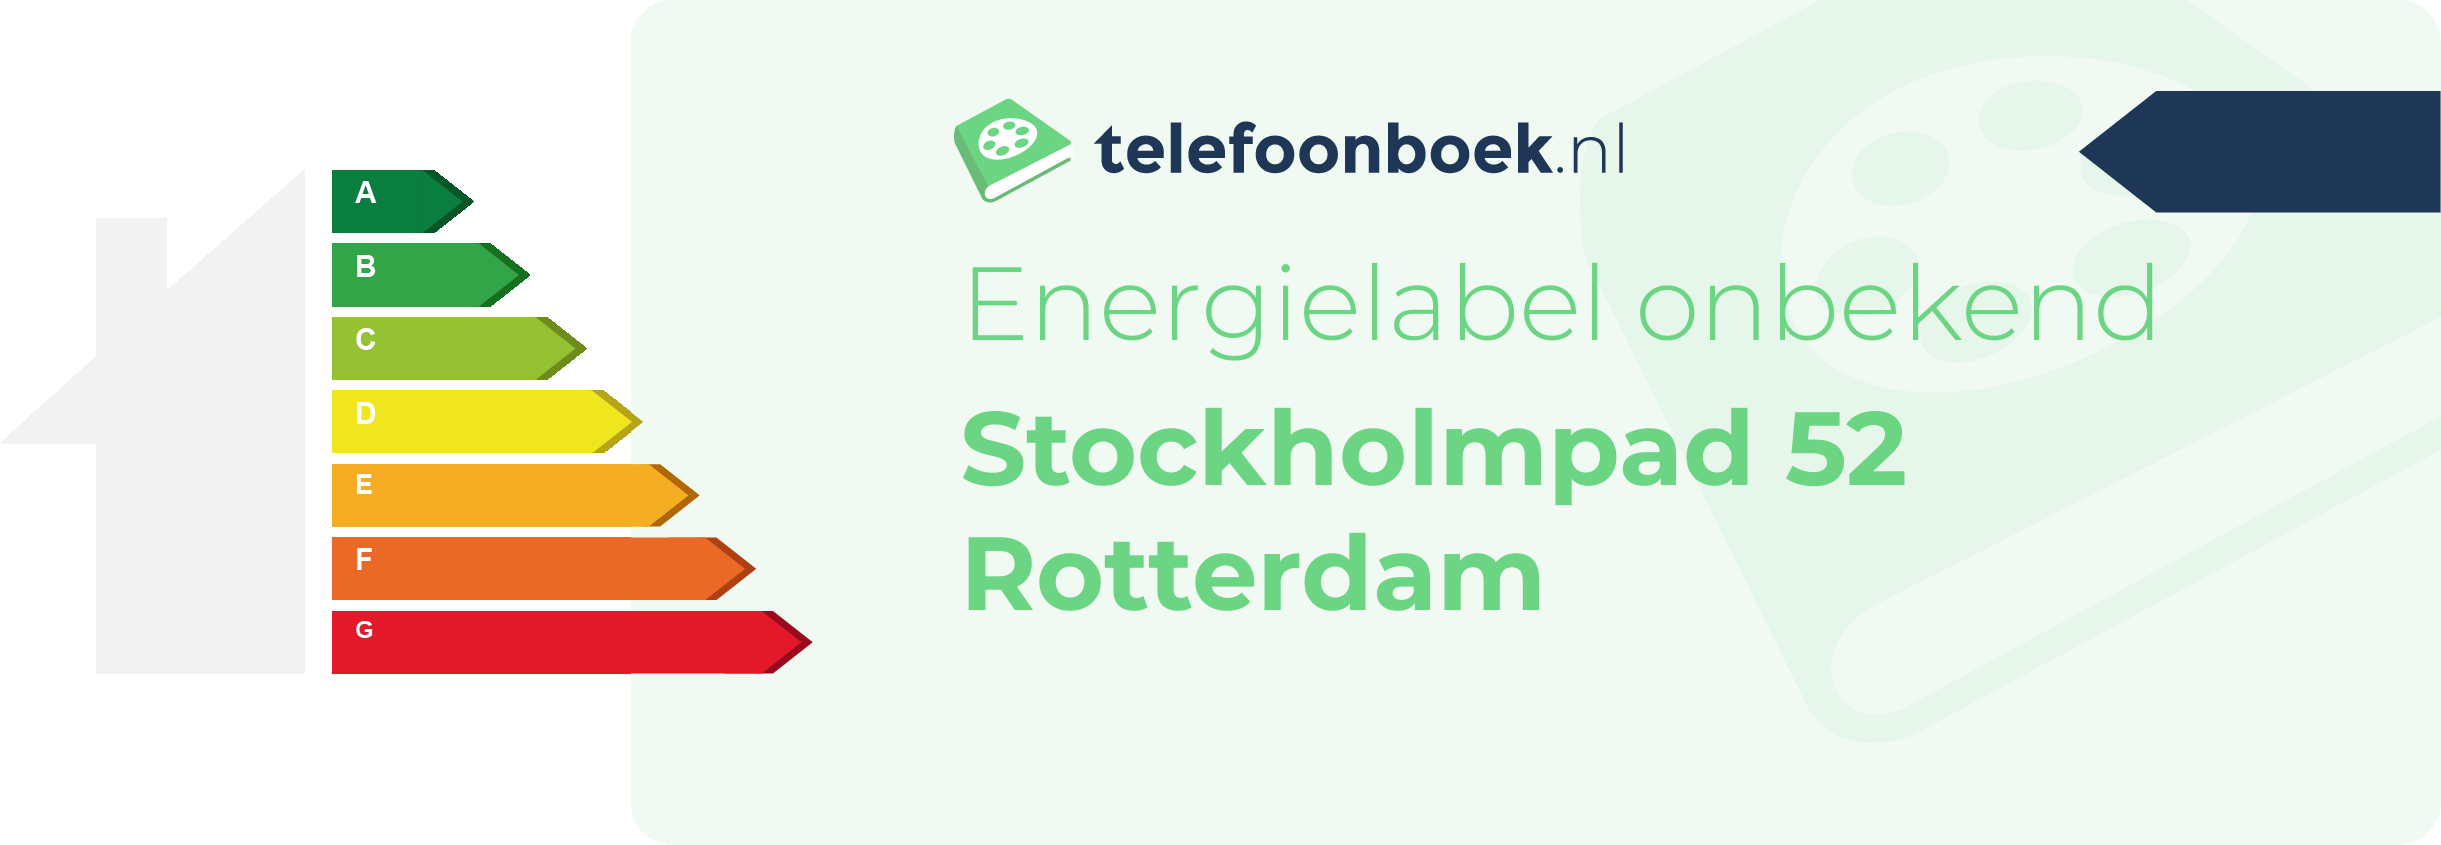 Energielabel Stockholmpad 52 Rotterdam